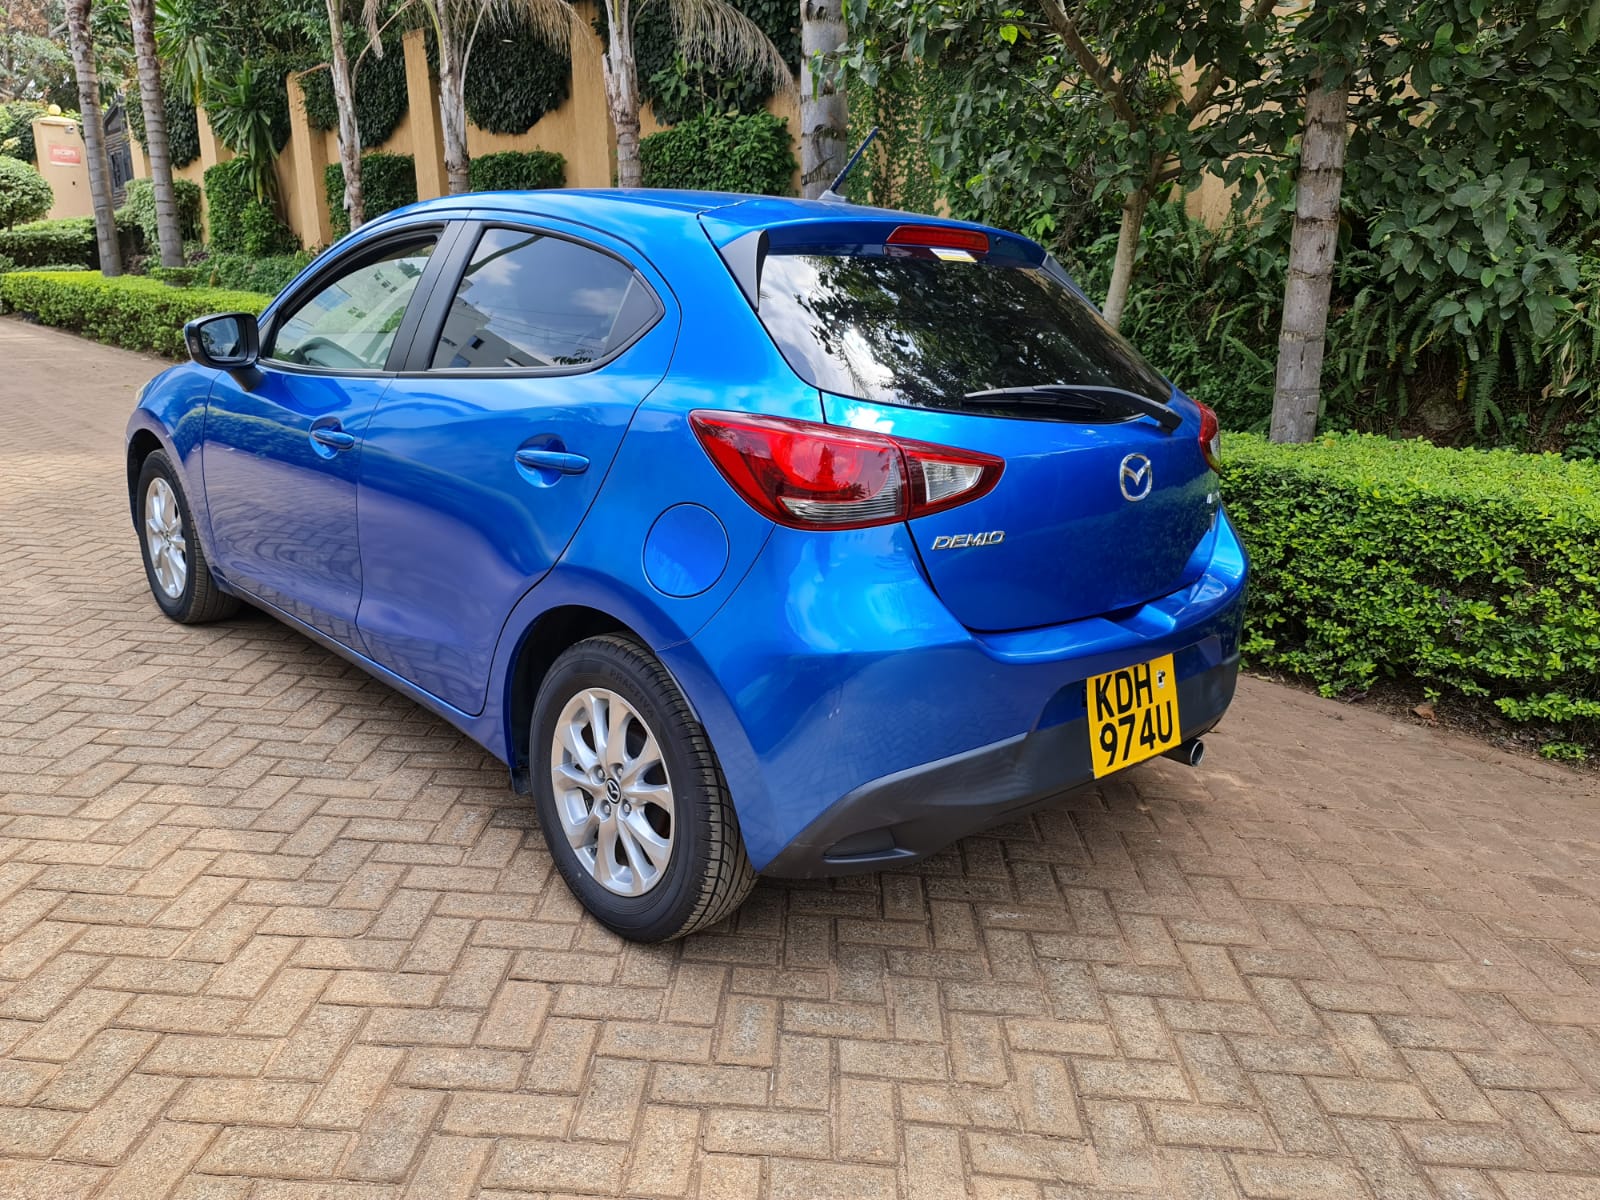 Mazda Demio 2015 latest Pay 20% deposit